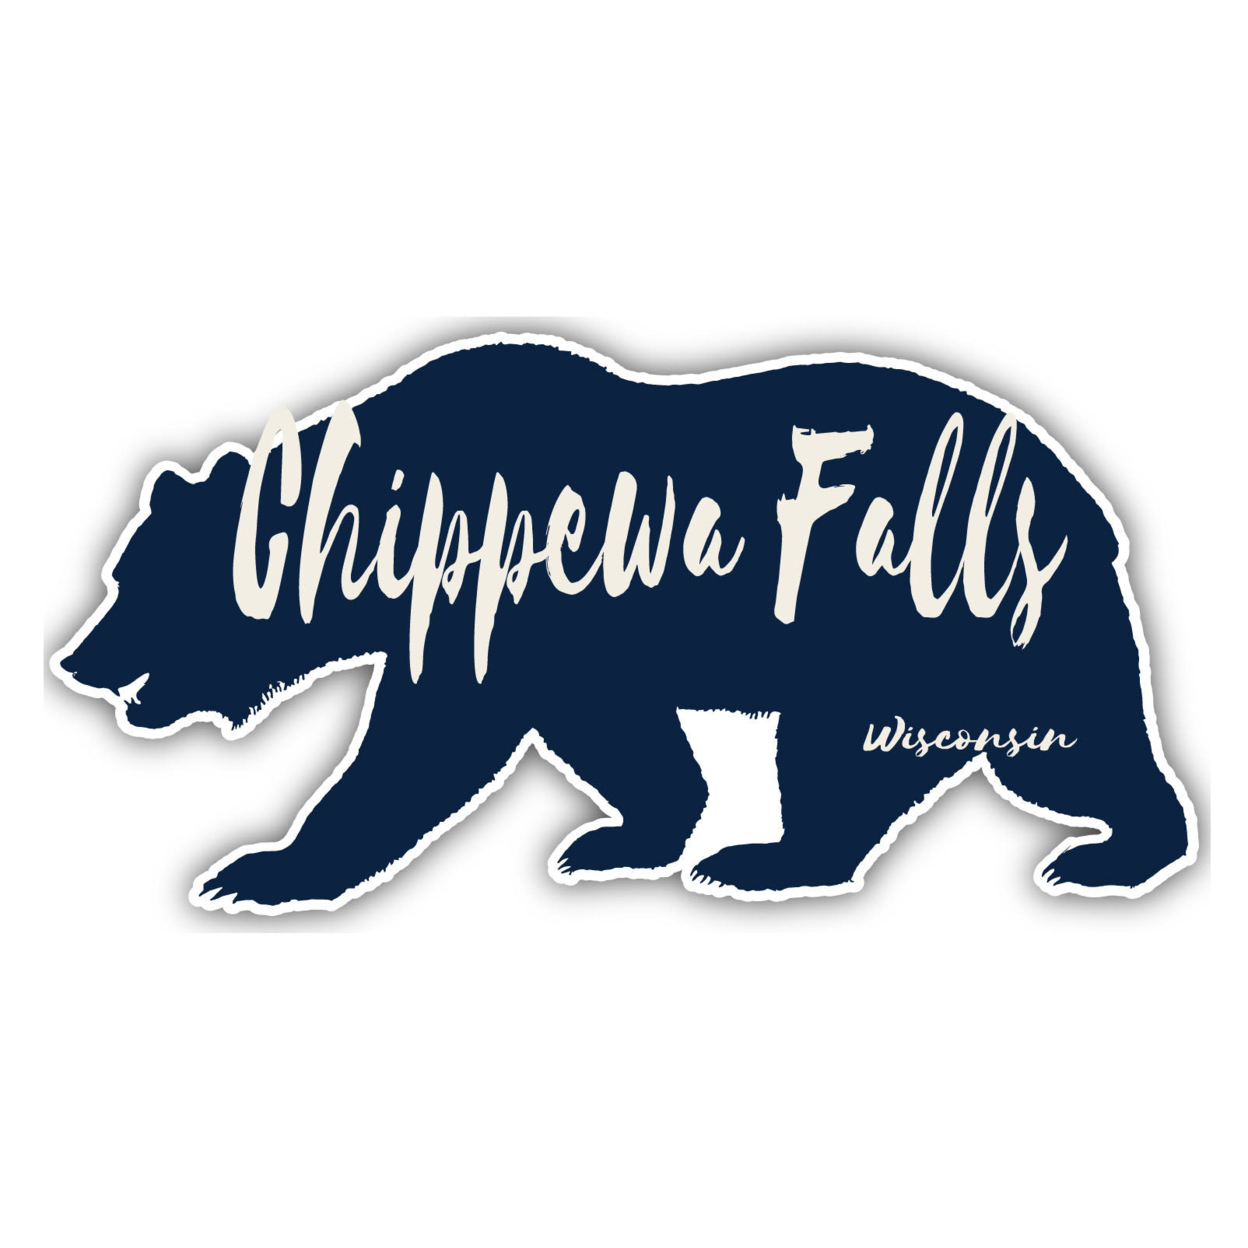 Chippewa Falls Wisconsin Souvenir Decorative Stickers (Choose Theme And Size) - Single Unit, 6-Inch, Bear